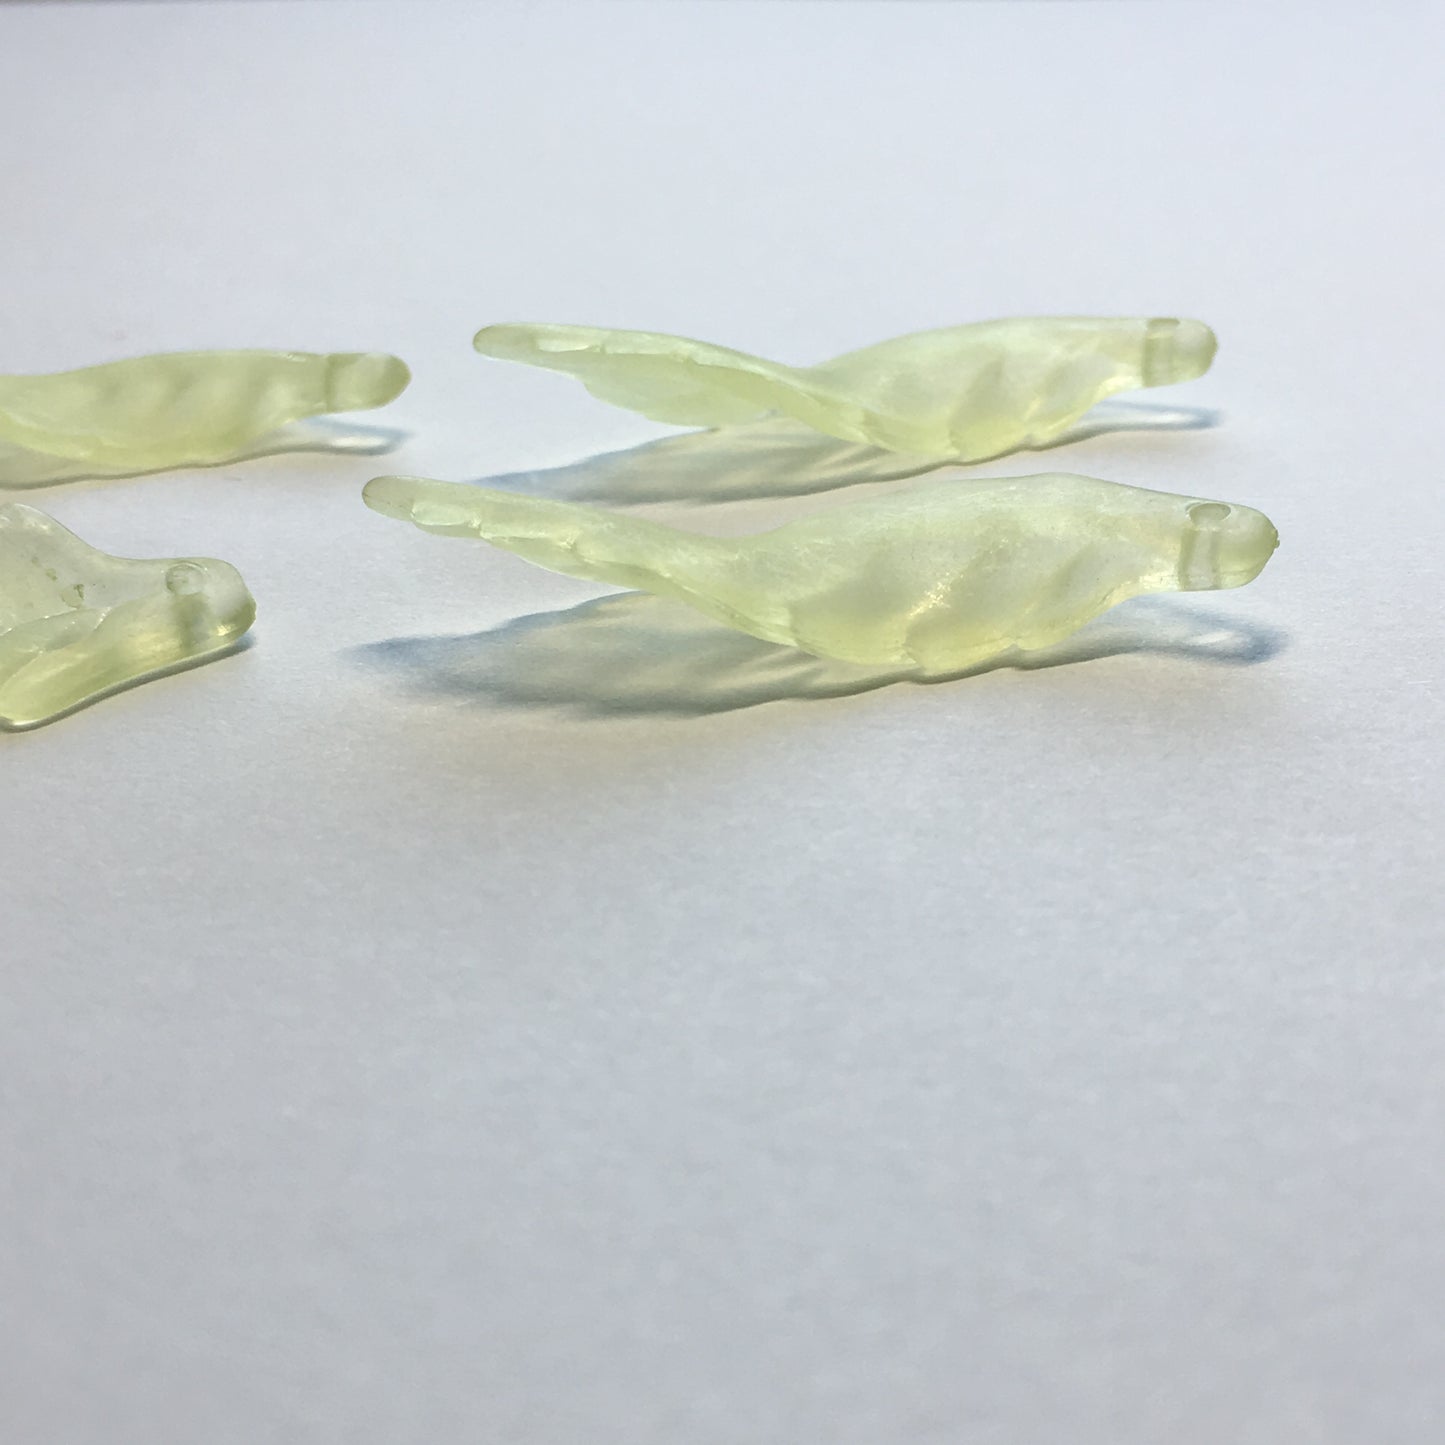 Translucent Light Green Acrylic Leaf Beads, 40 x 14 mm, 4 Beads